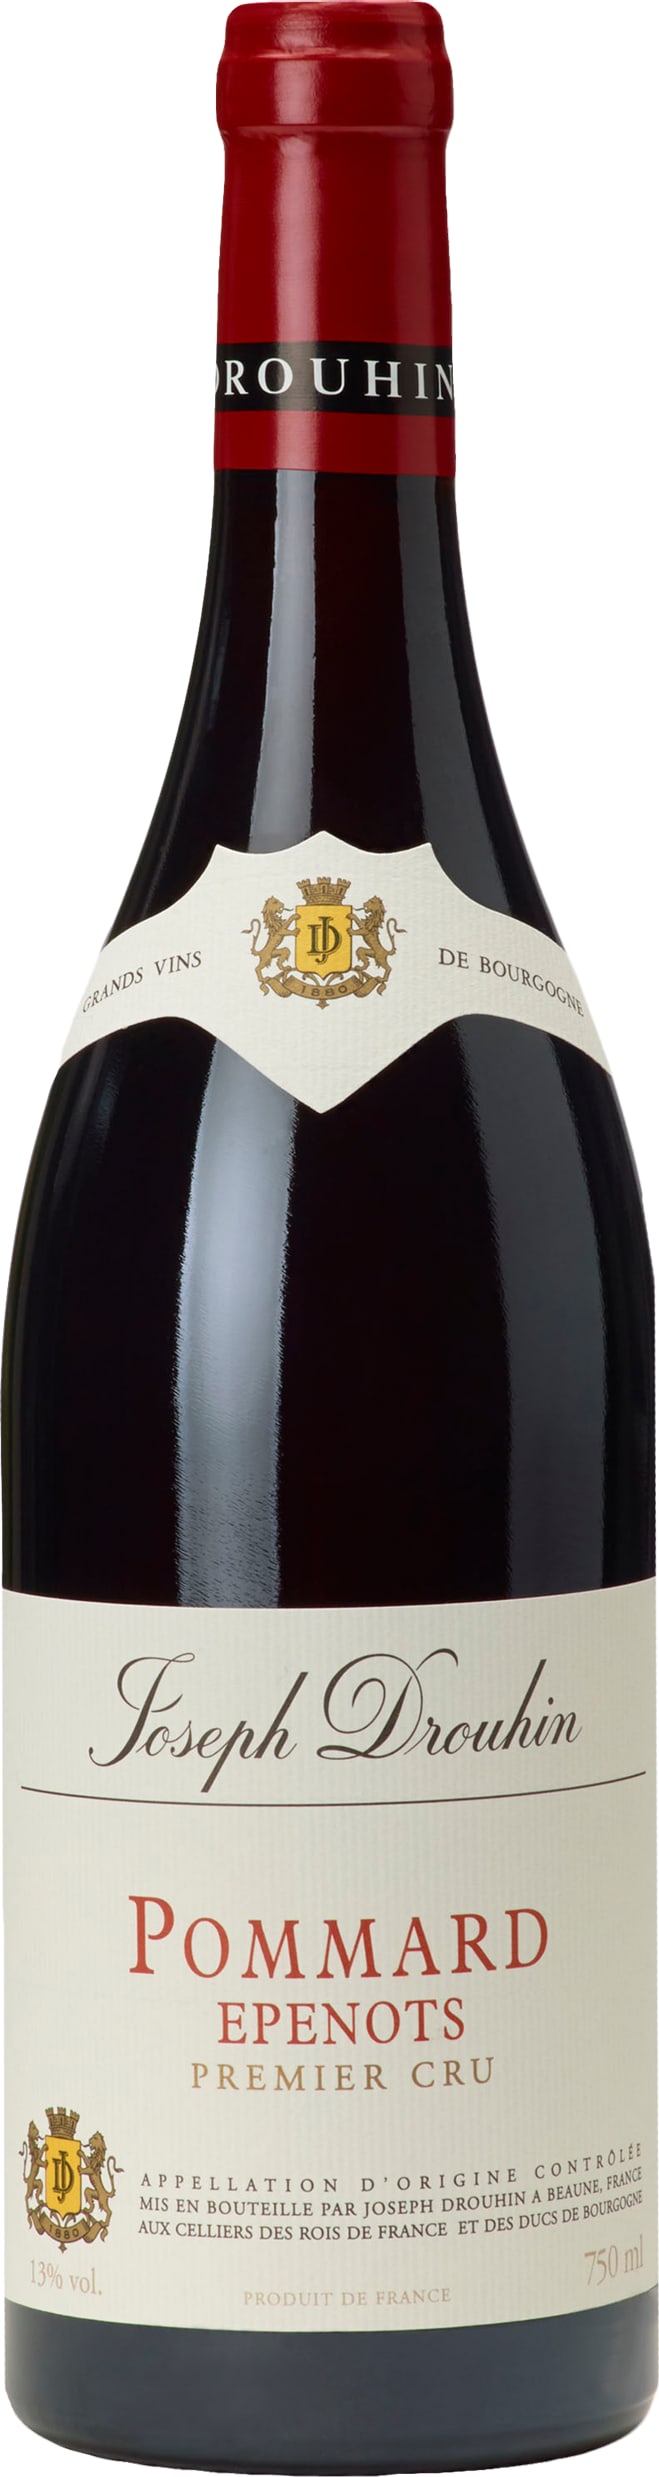 Joseph Drouhin Pommard Premier Cru Epenots 2017 75cl - Buy Joseph Drouhin Wines from GREAT WINES DIRECT wine shop